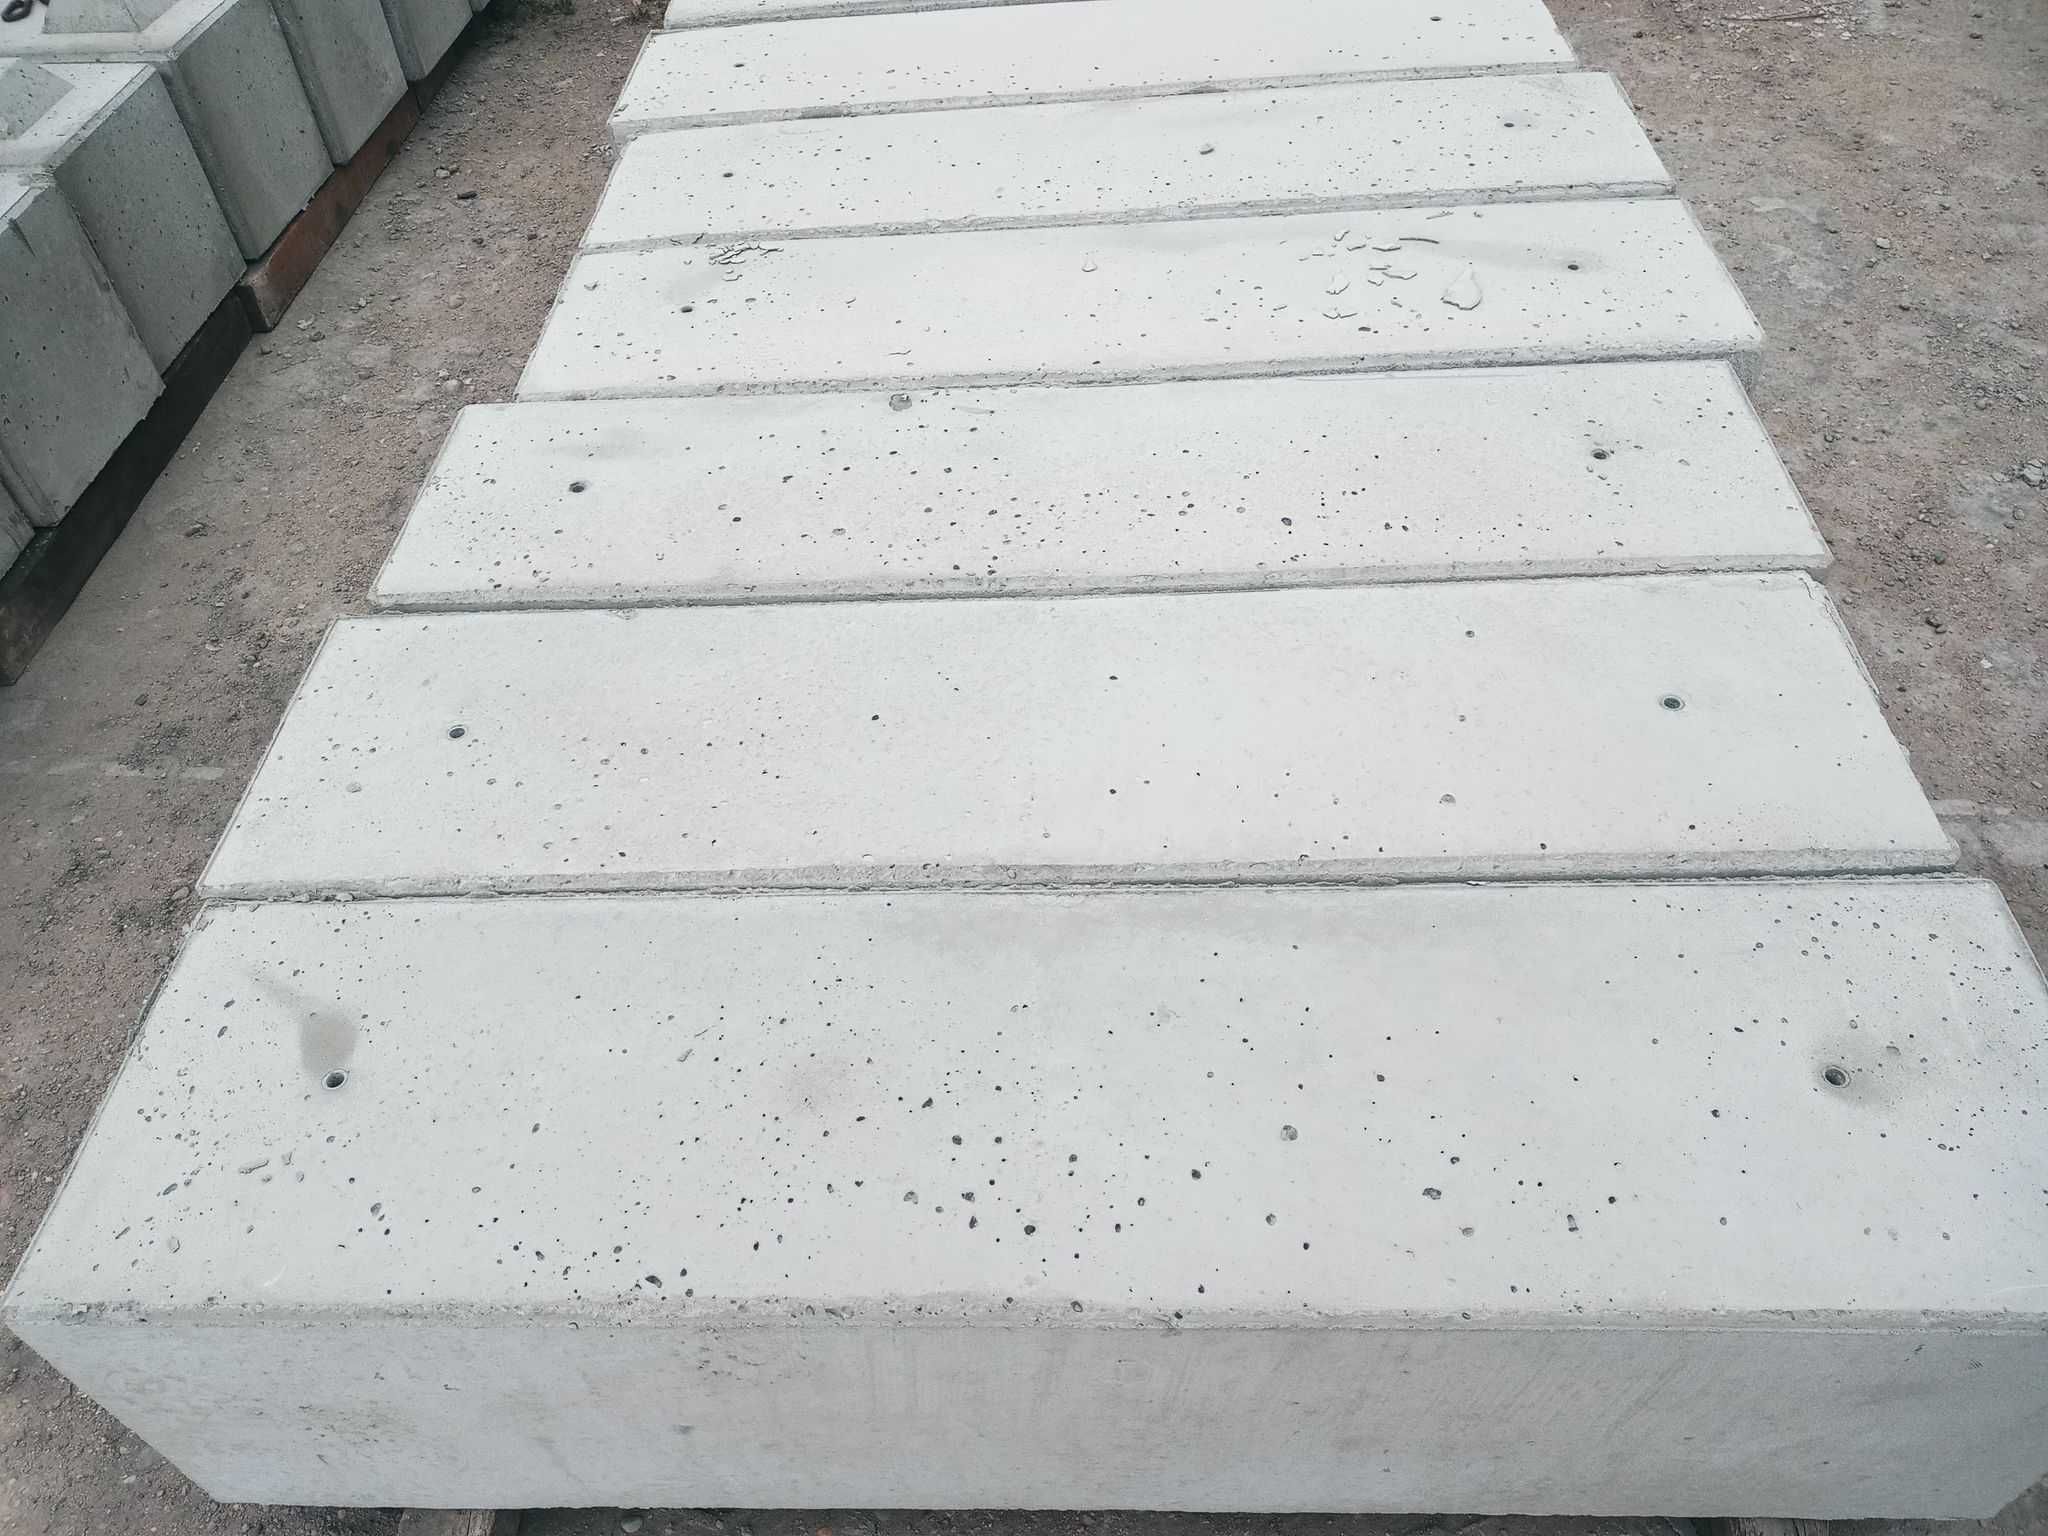 Bloki betonowe typu "LEGO" 160X40X40cm